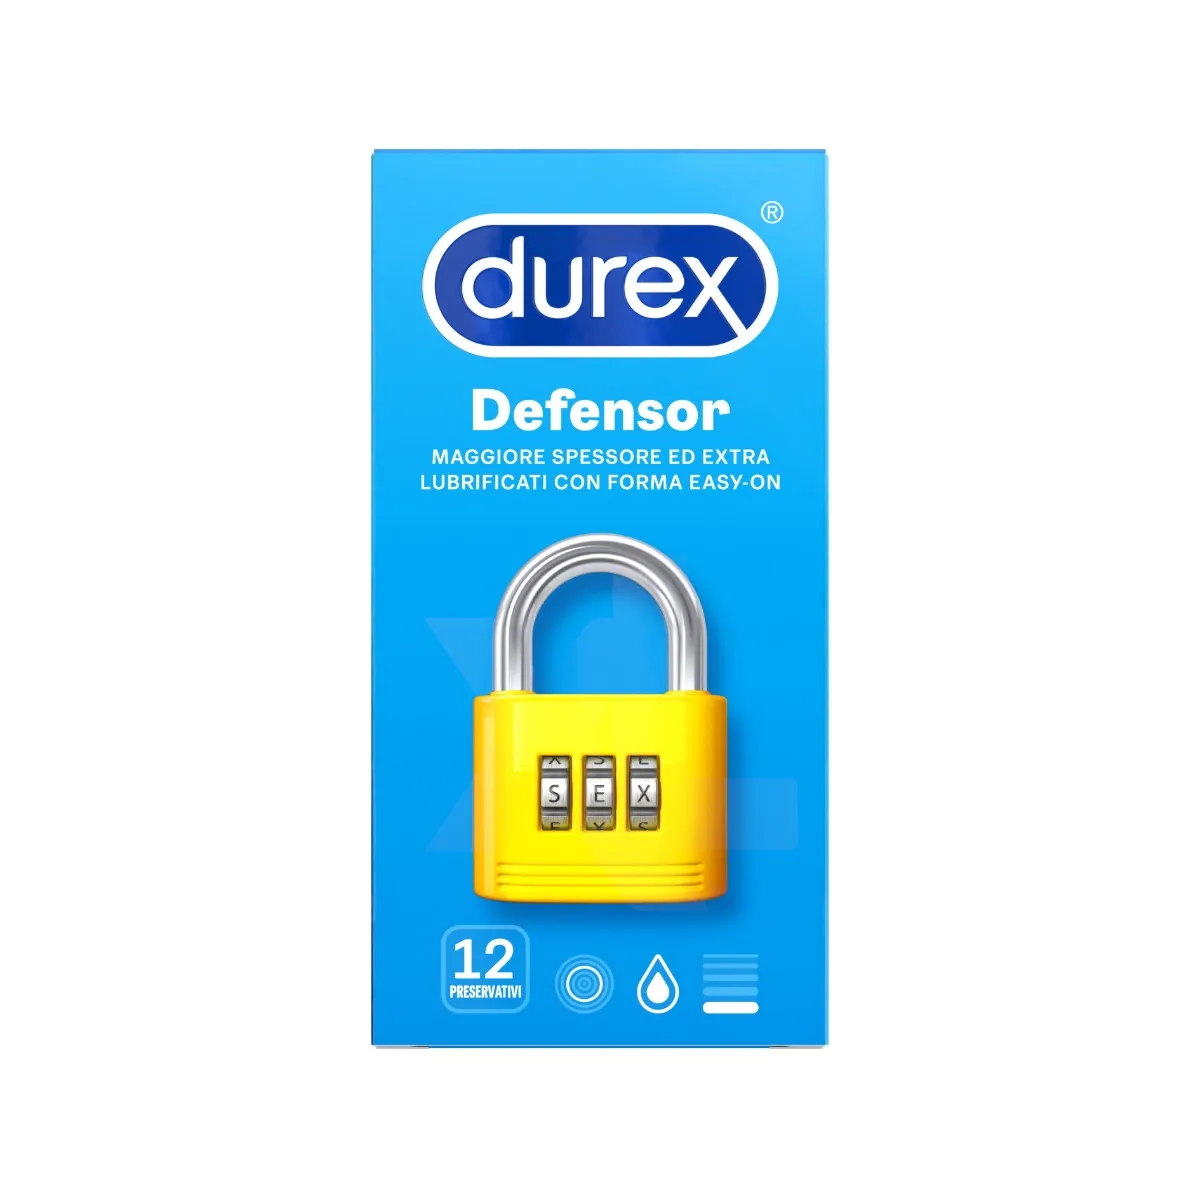 Durex Defensor Preservativi Lubrificati 12 Pezzi 